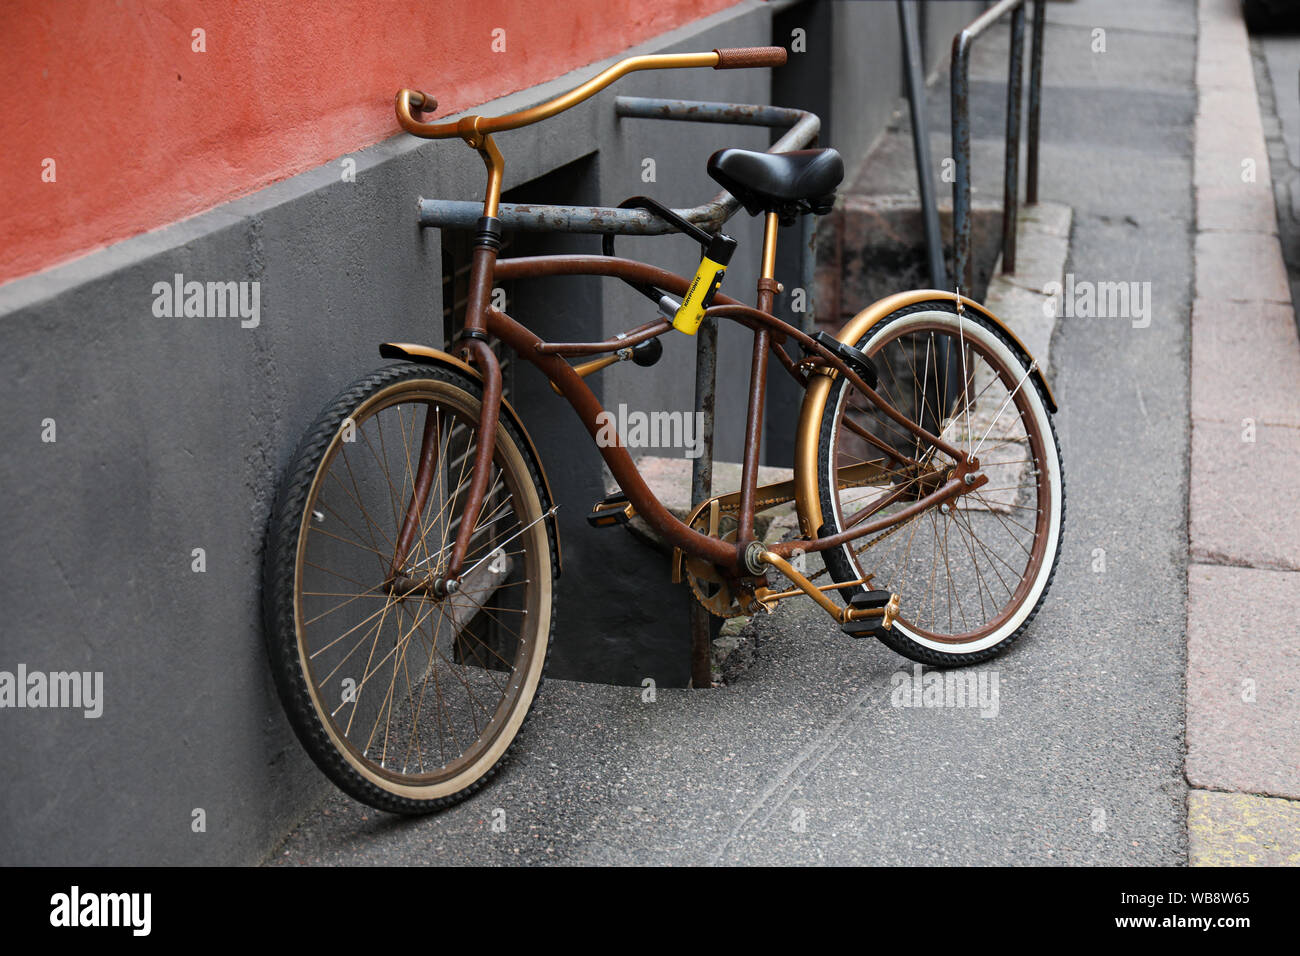 Retro styled bike locked to a railing Stock Photo